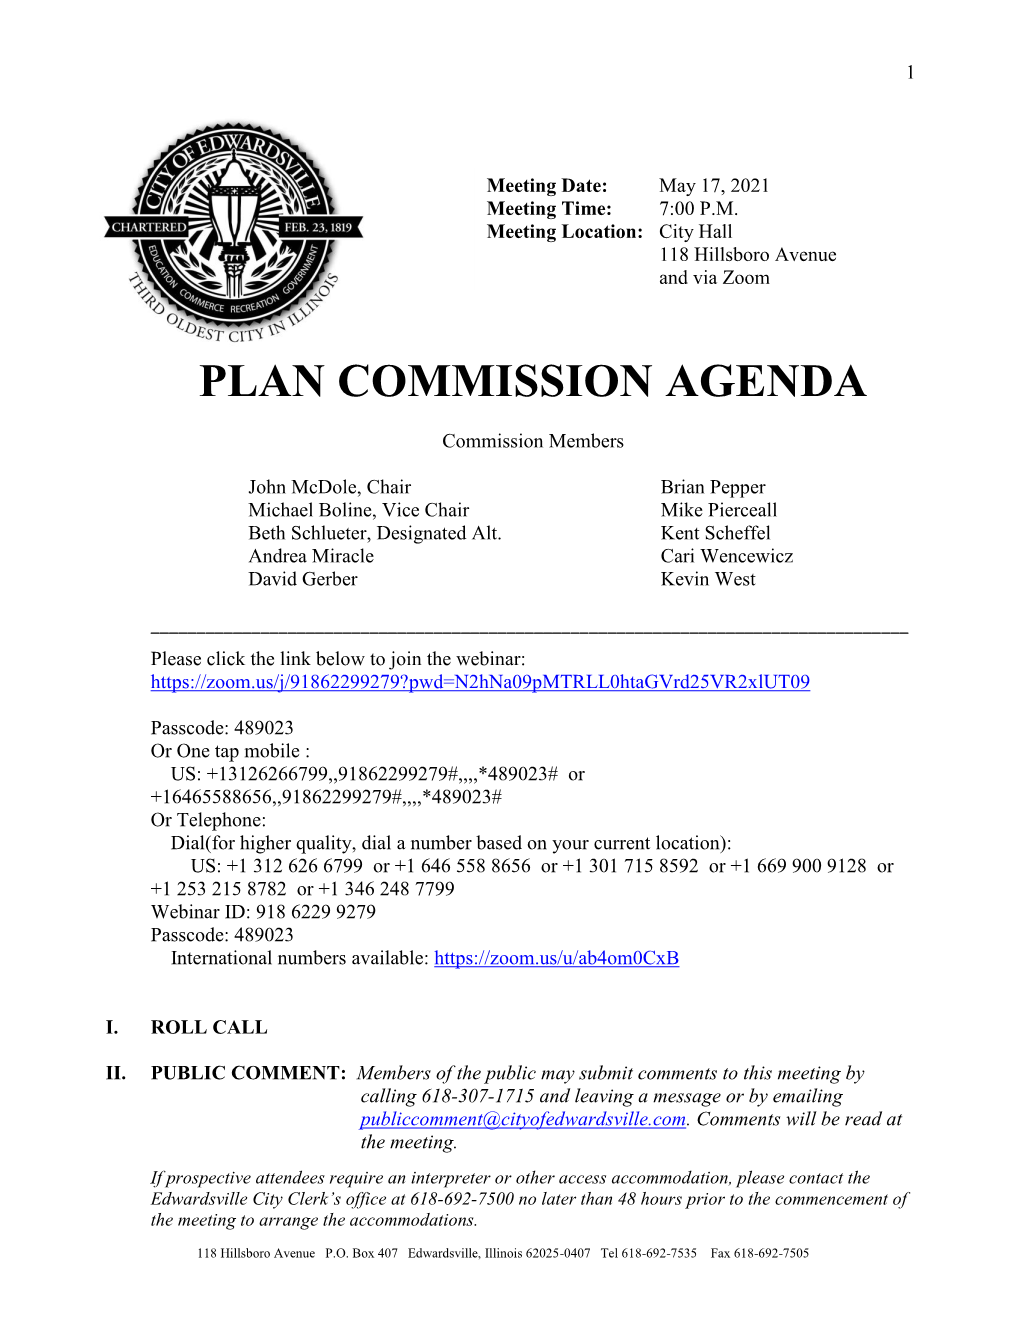 Plan Commission Agenda